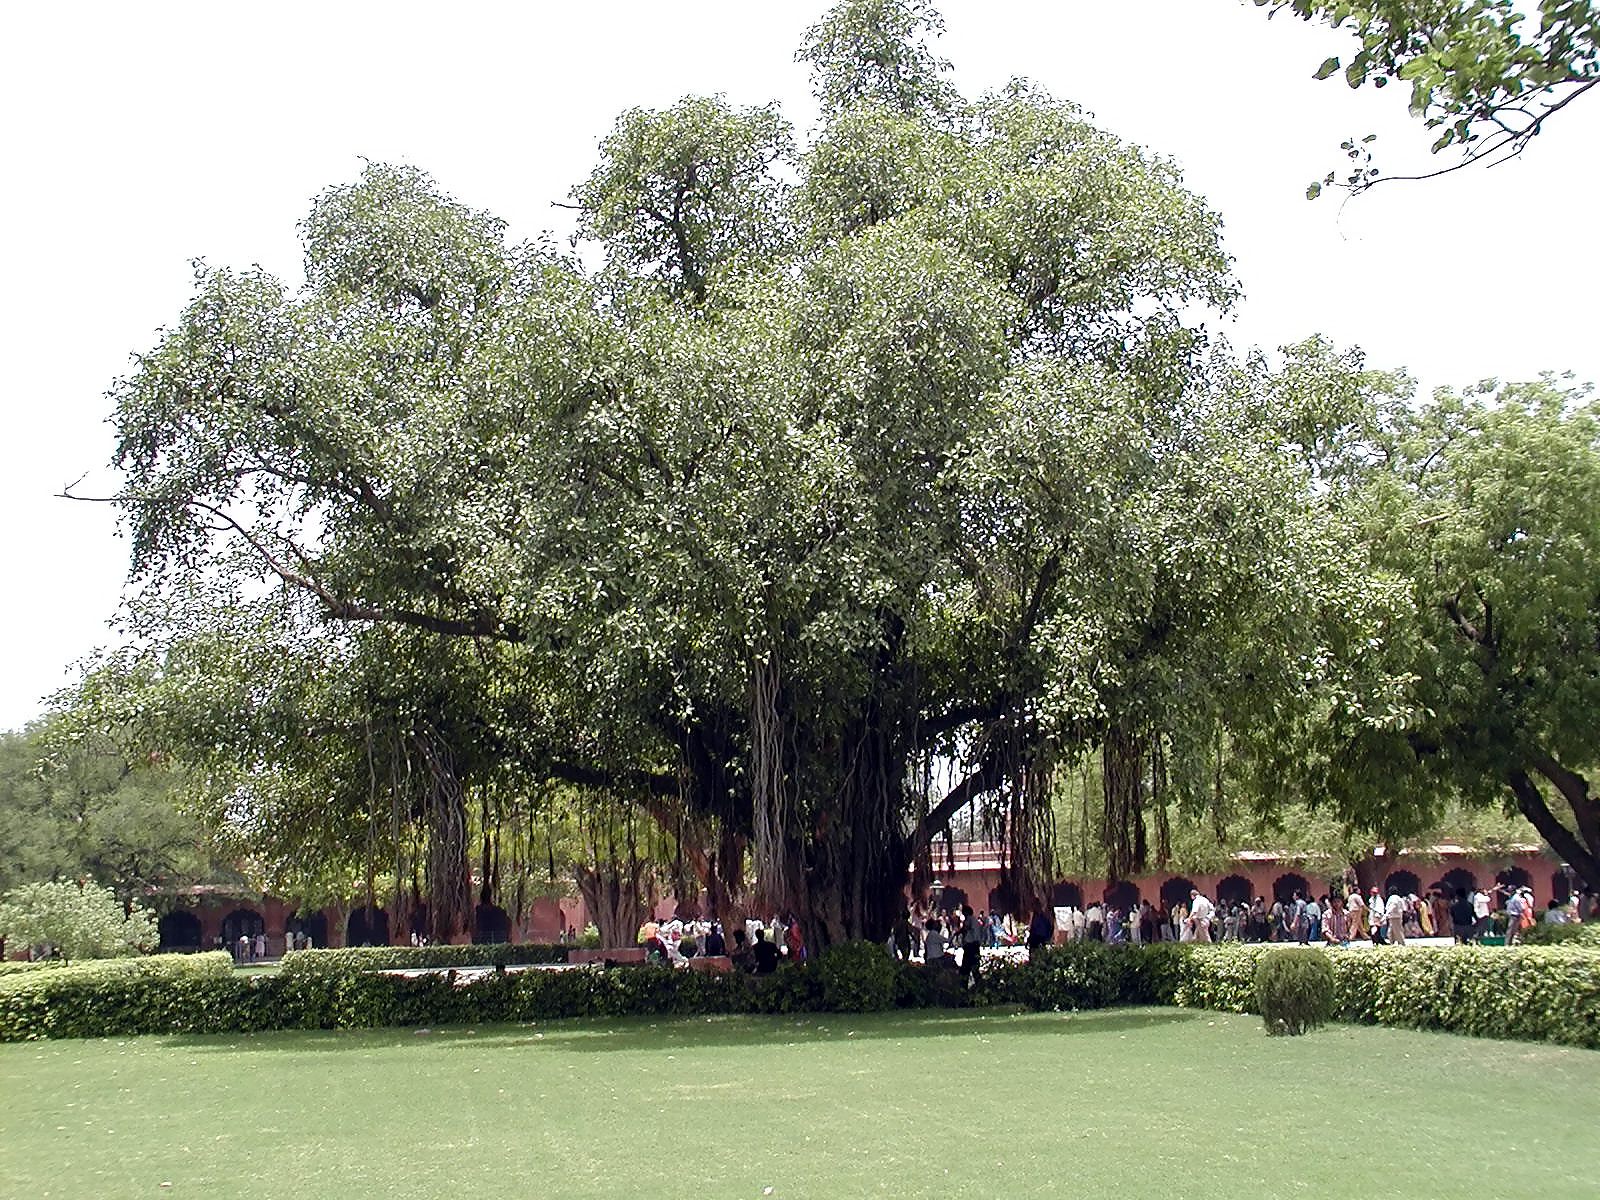 10-Jun-2001 11:56 - Agra - The Taj Mahal - Large tree outside the main gate